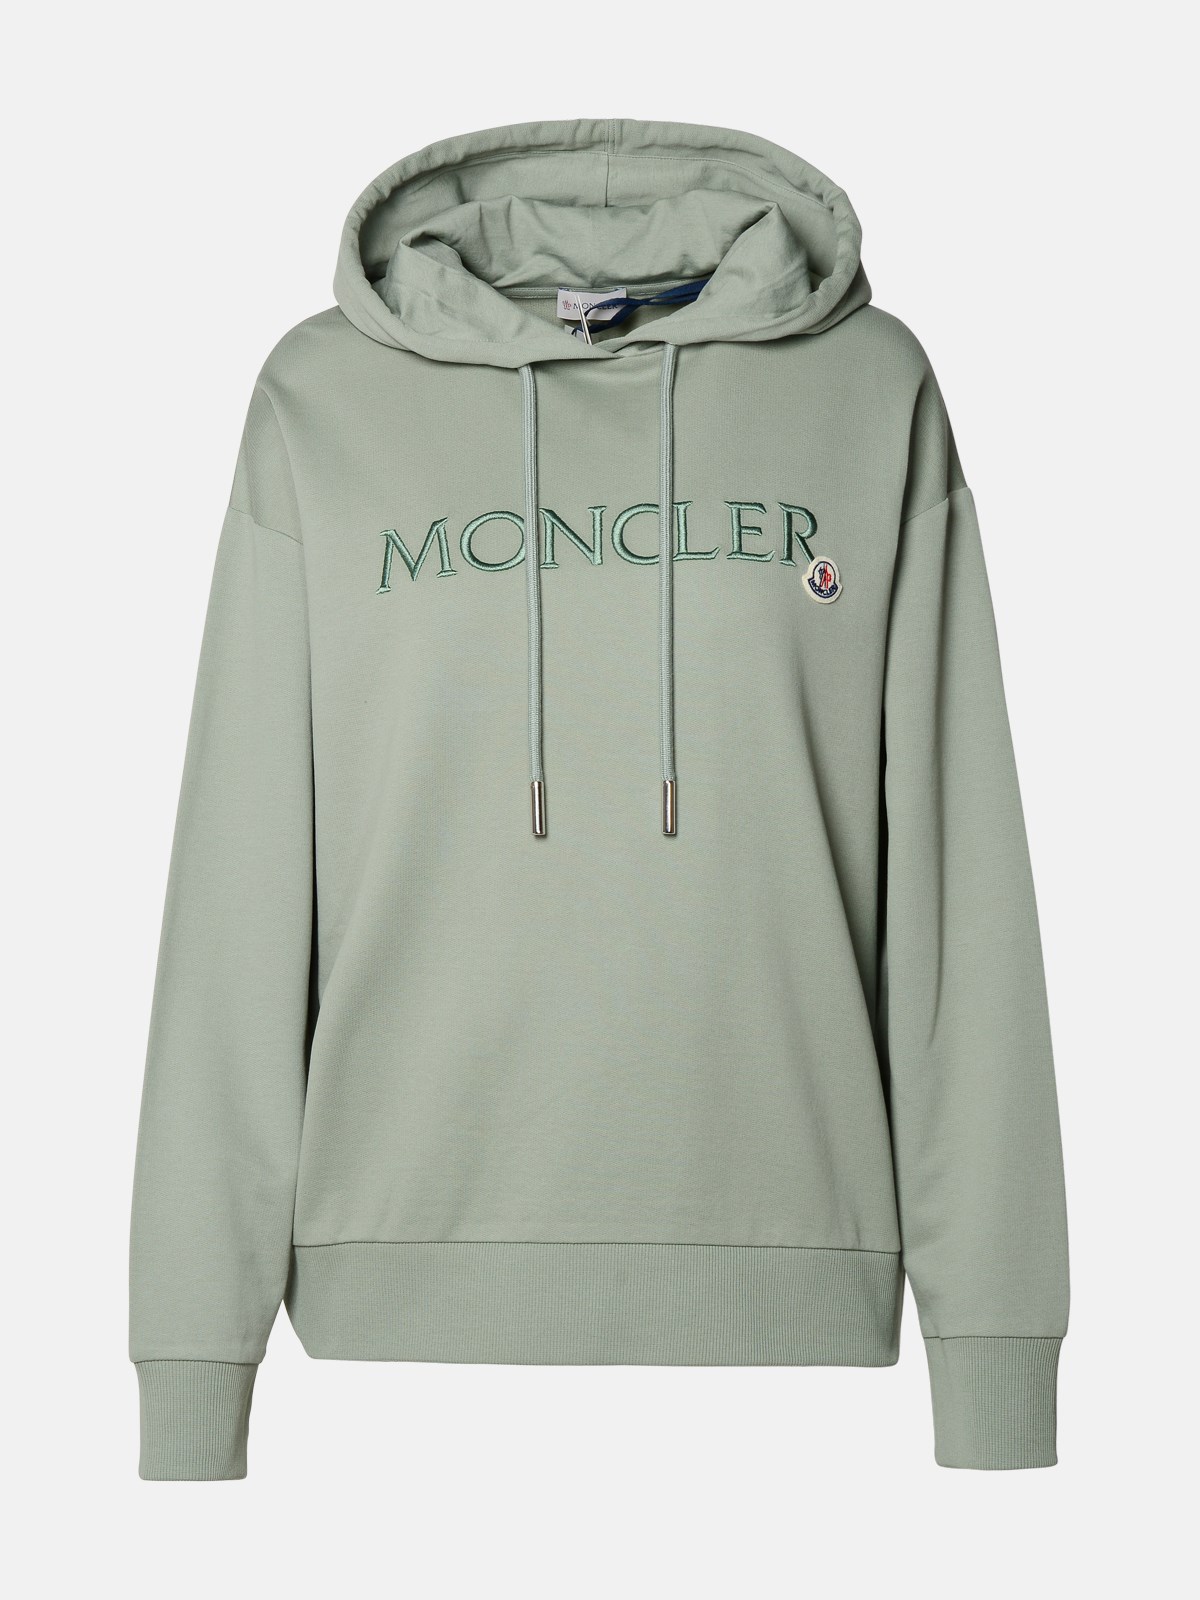 Moncler Green Cotton Sweatshirt